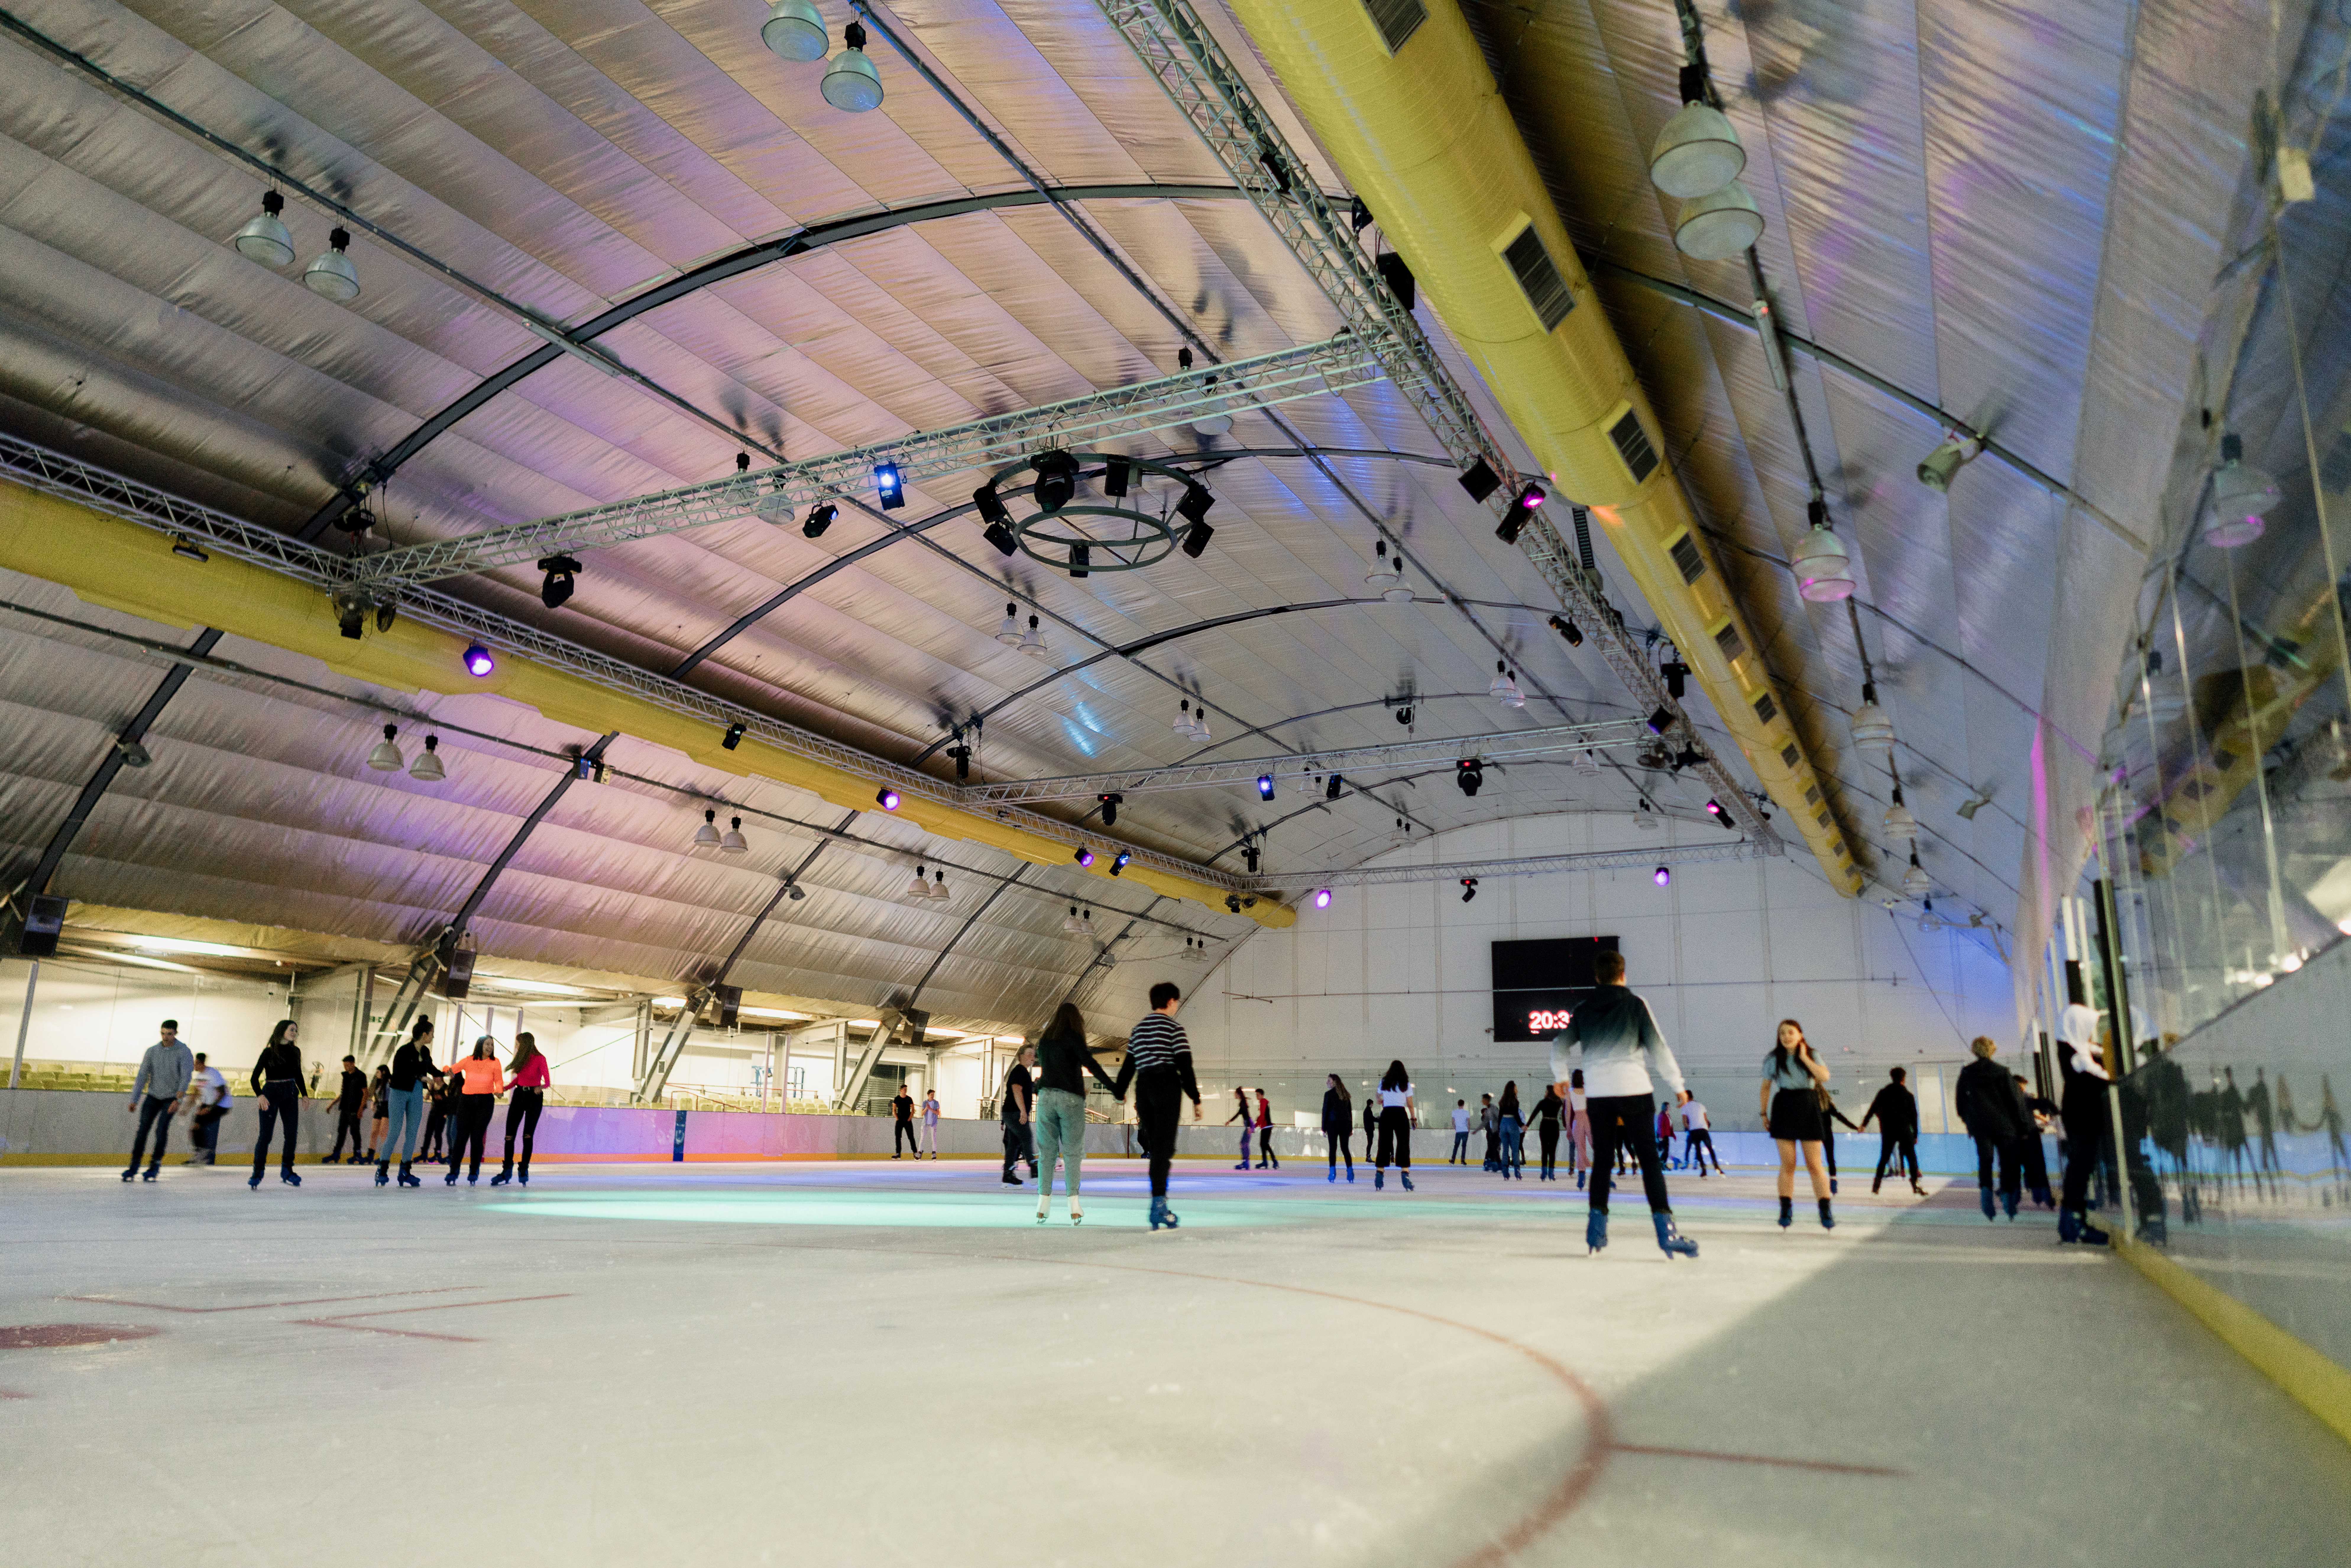 Riverside Leisure Centre ice rink